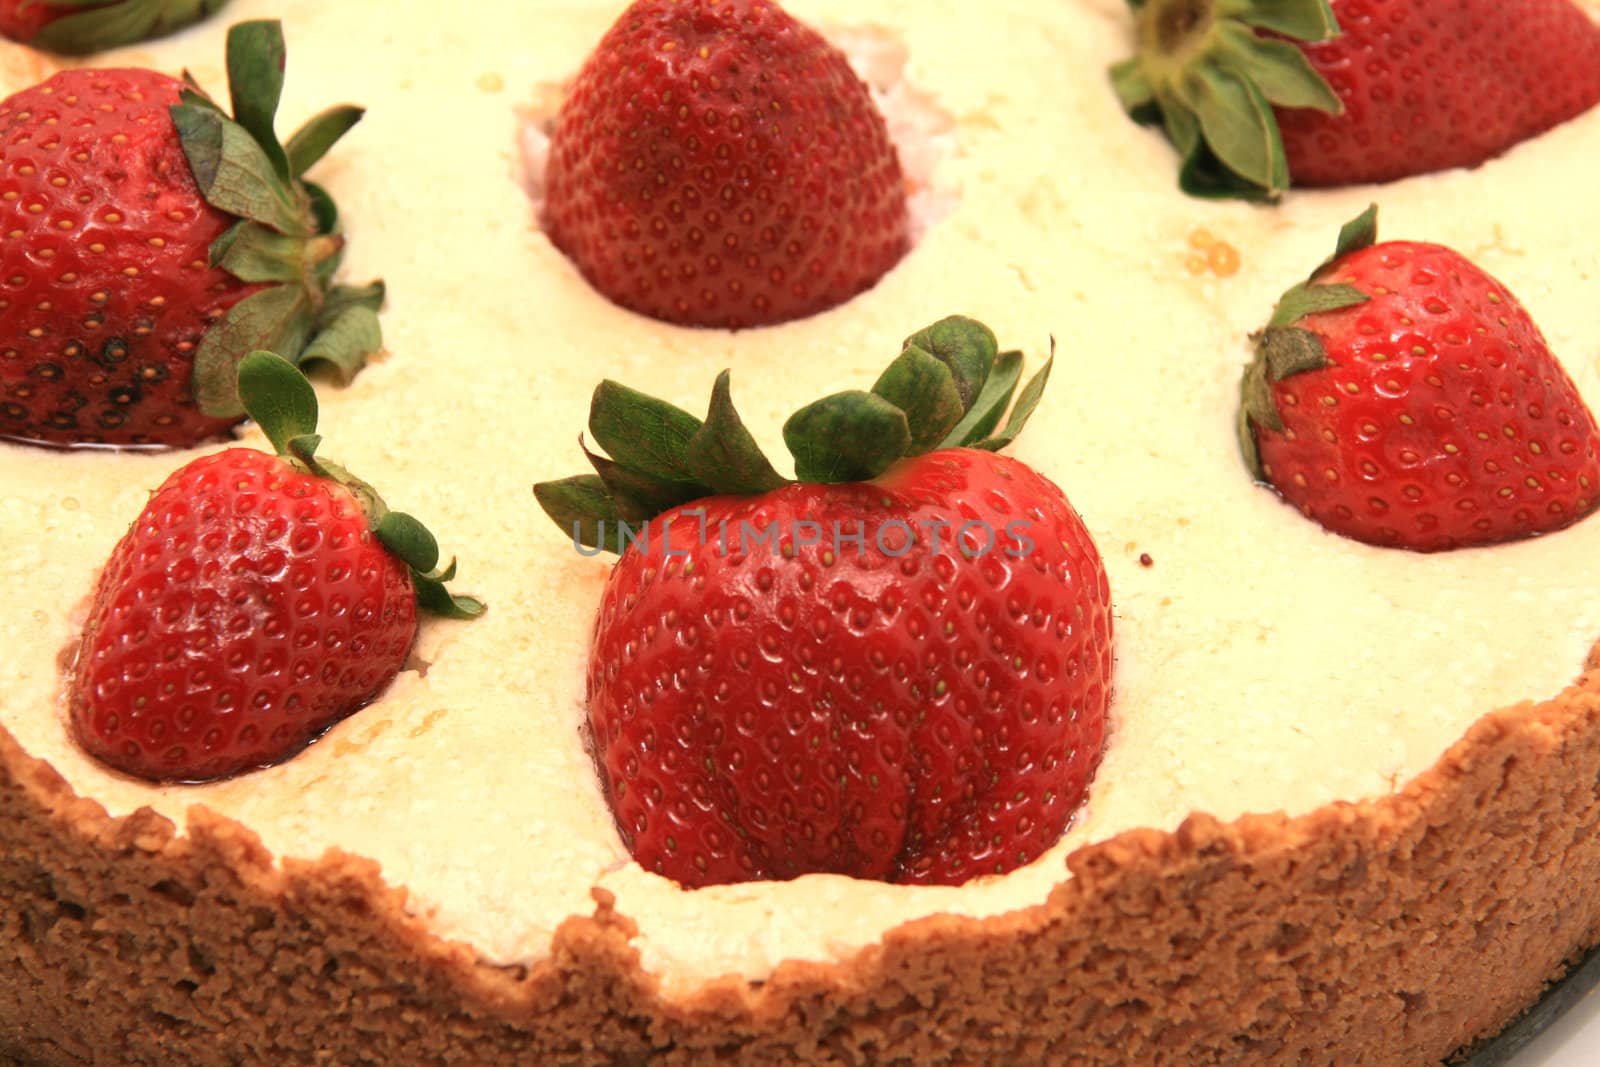 strawberries and chocolate cake by jpcasais